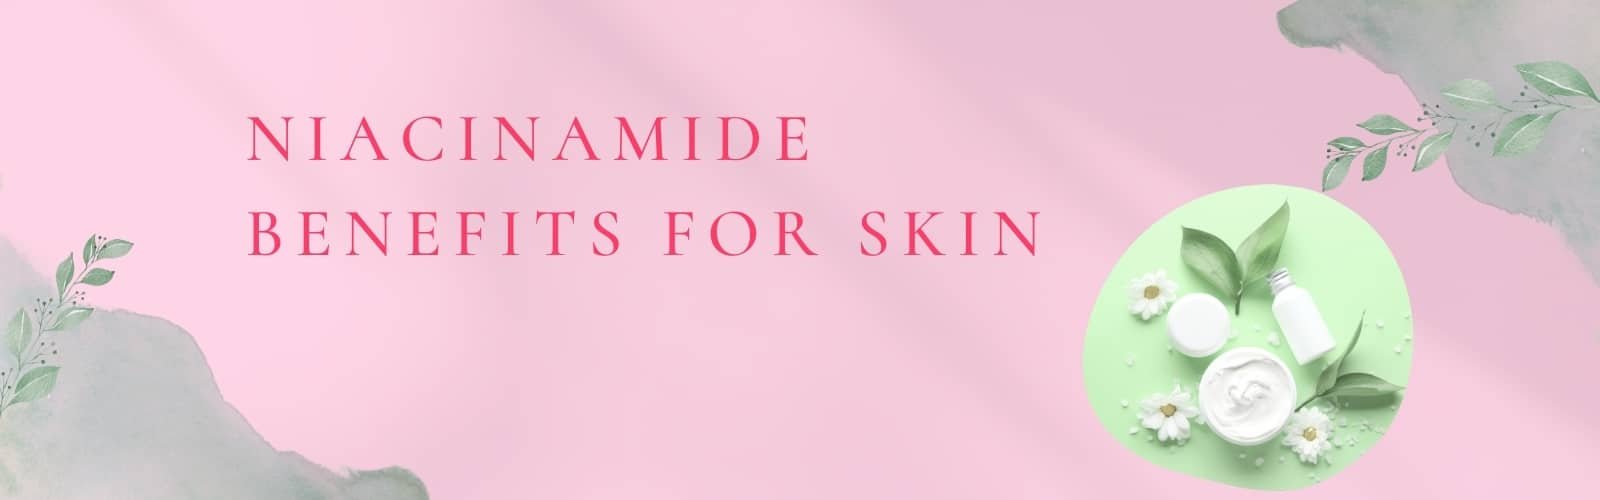 Niacinamide Benefits for Skin